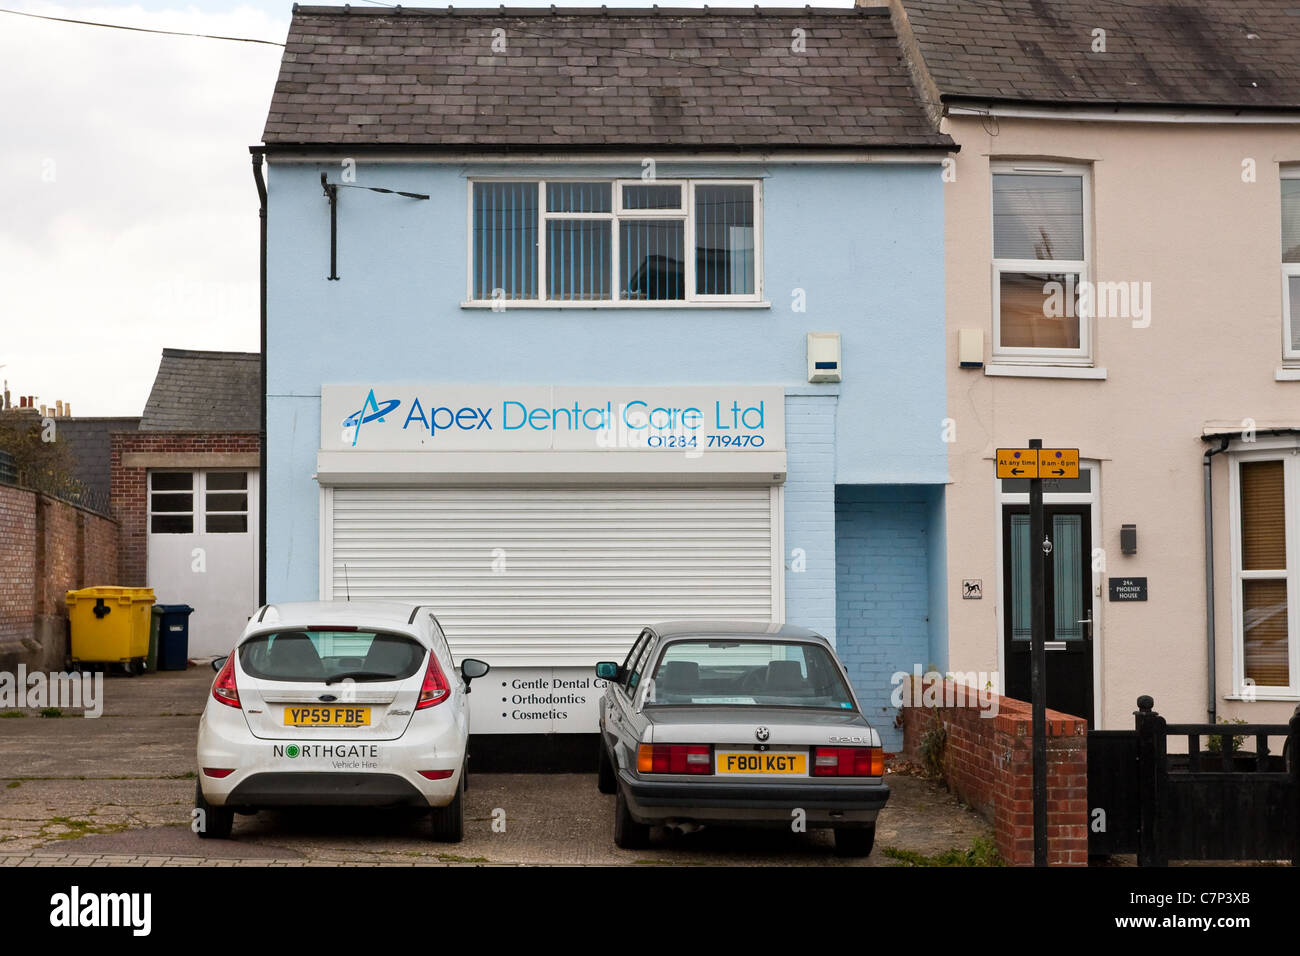 A high street dental practice in Bury St Edmunds, UK Stock Photo